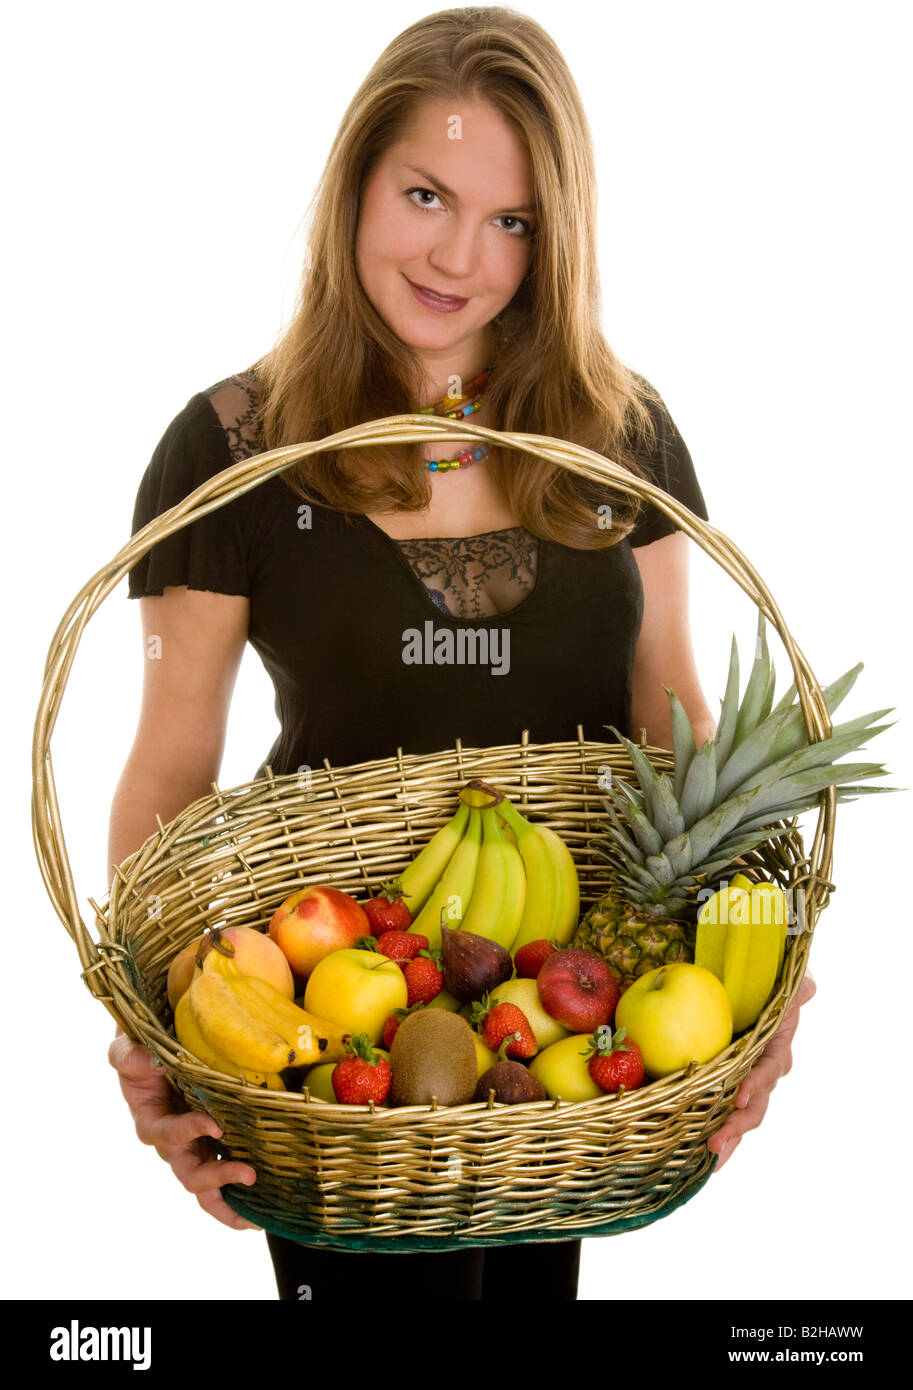 fruit basket fruits healthfull sound food feeding woman Stock Photo